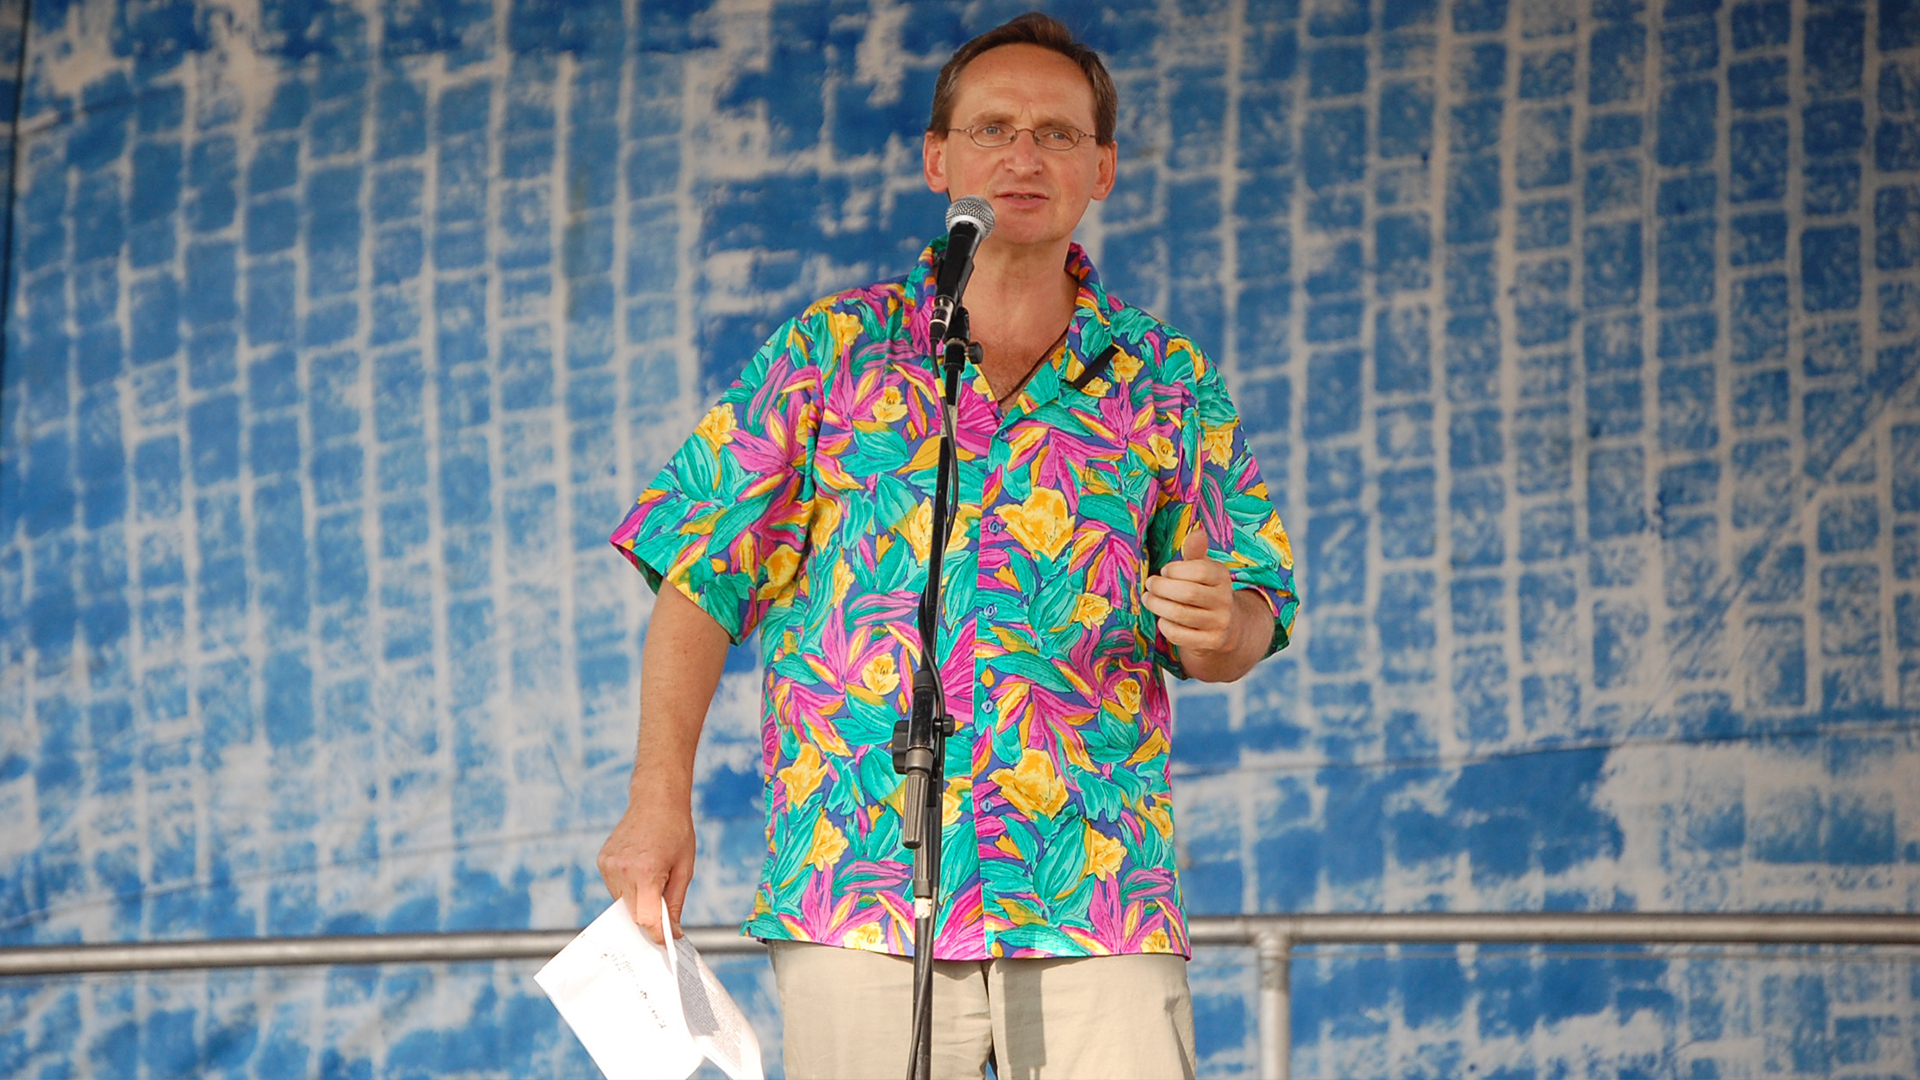 Polish Comedian Wojciech Cejrowski